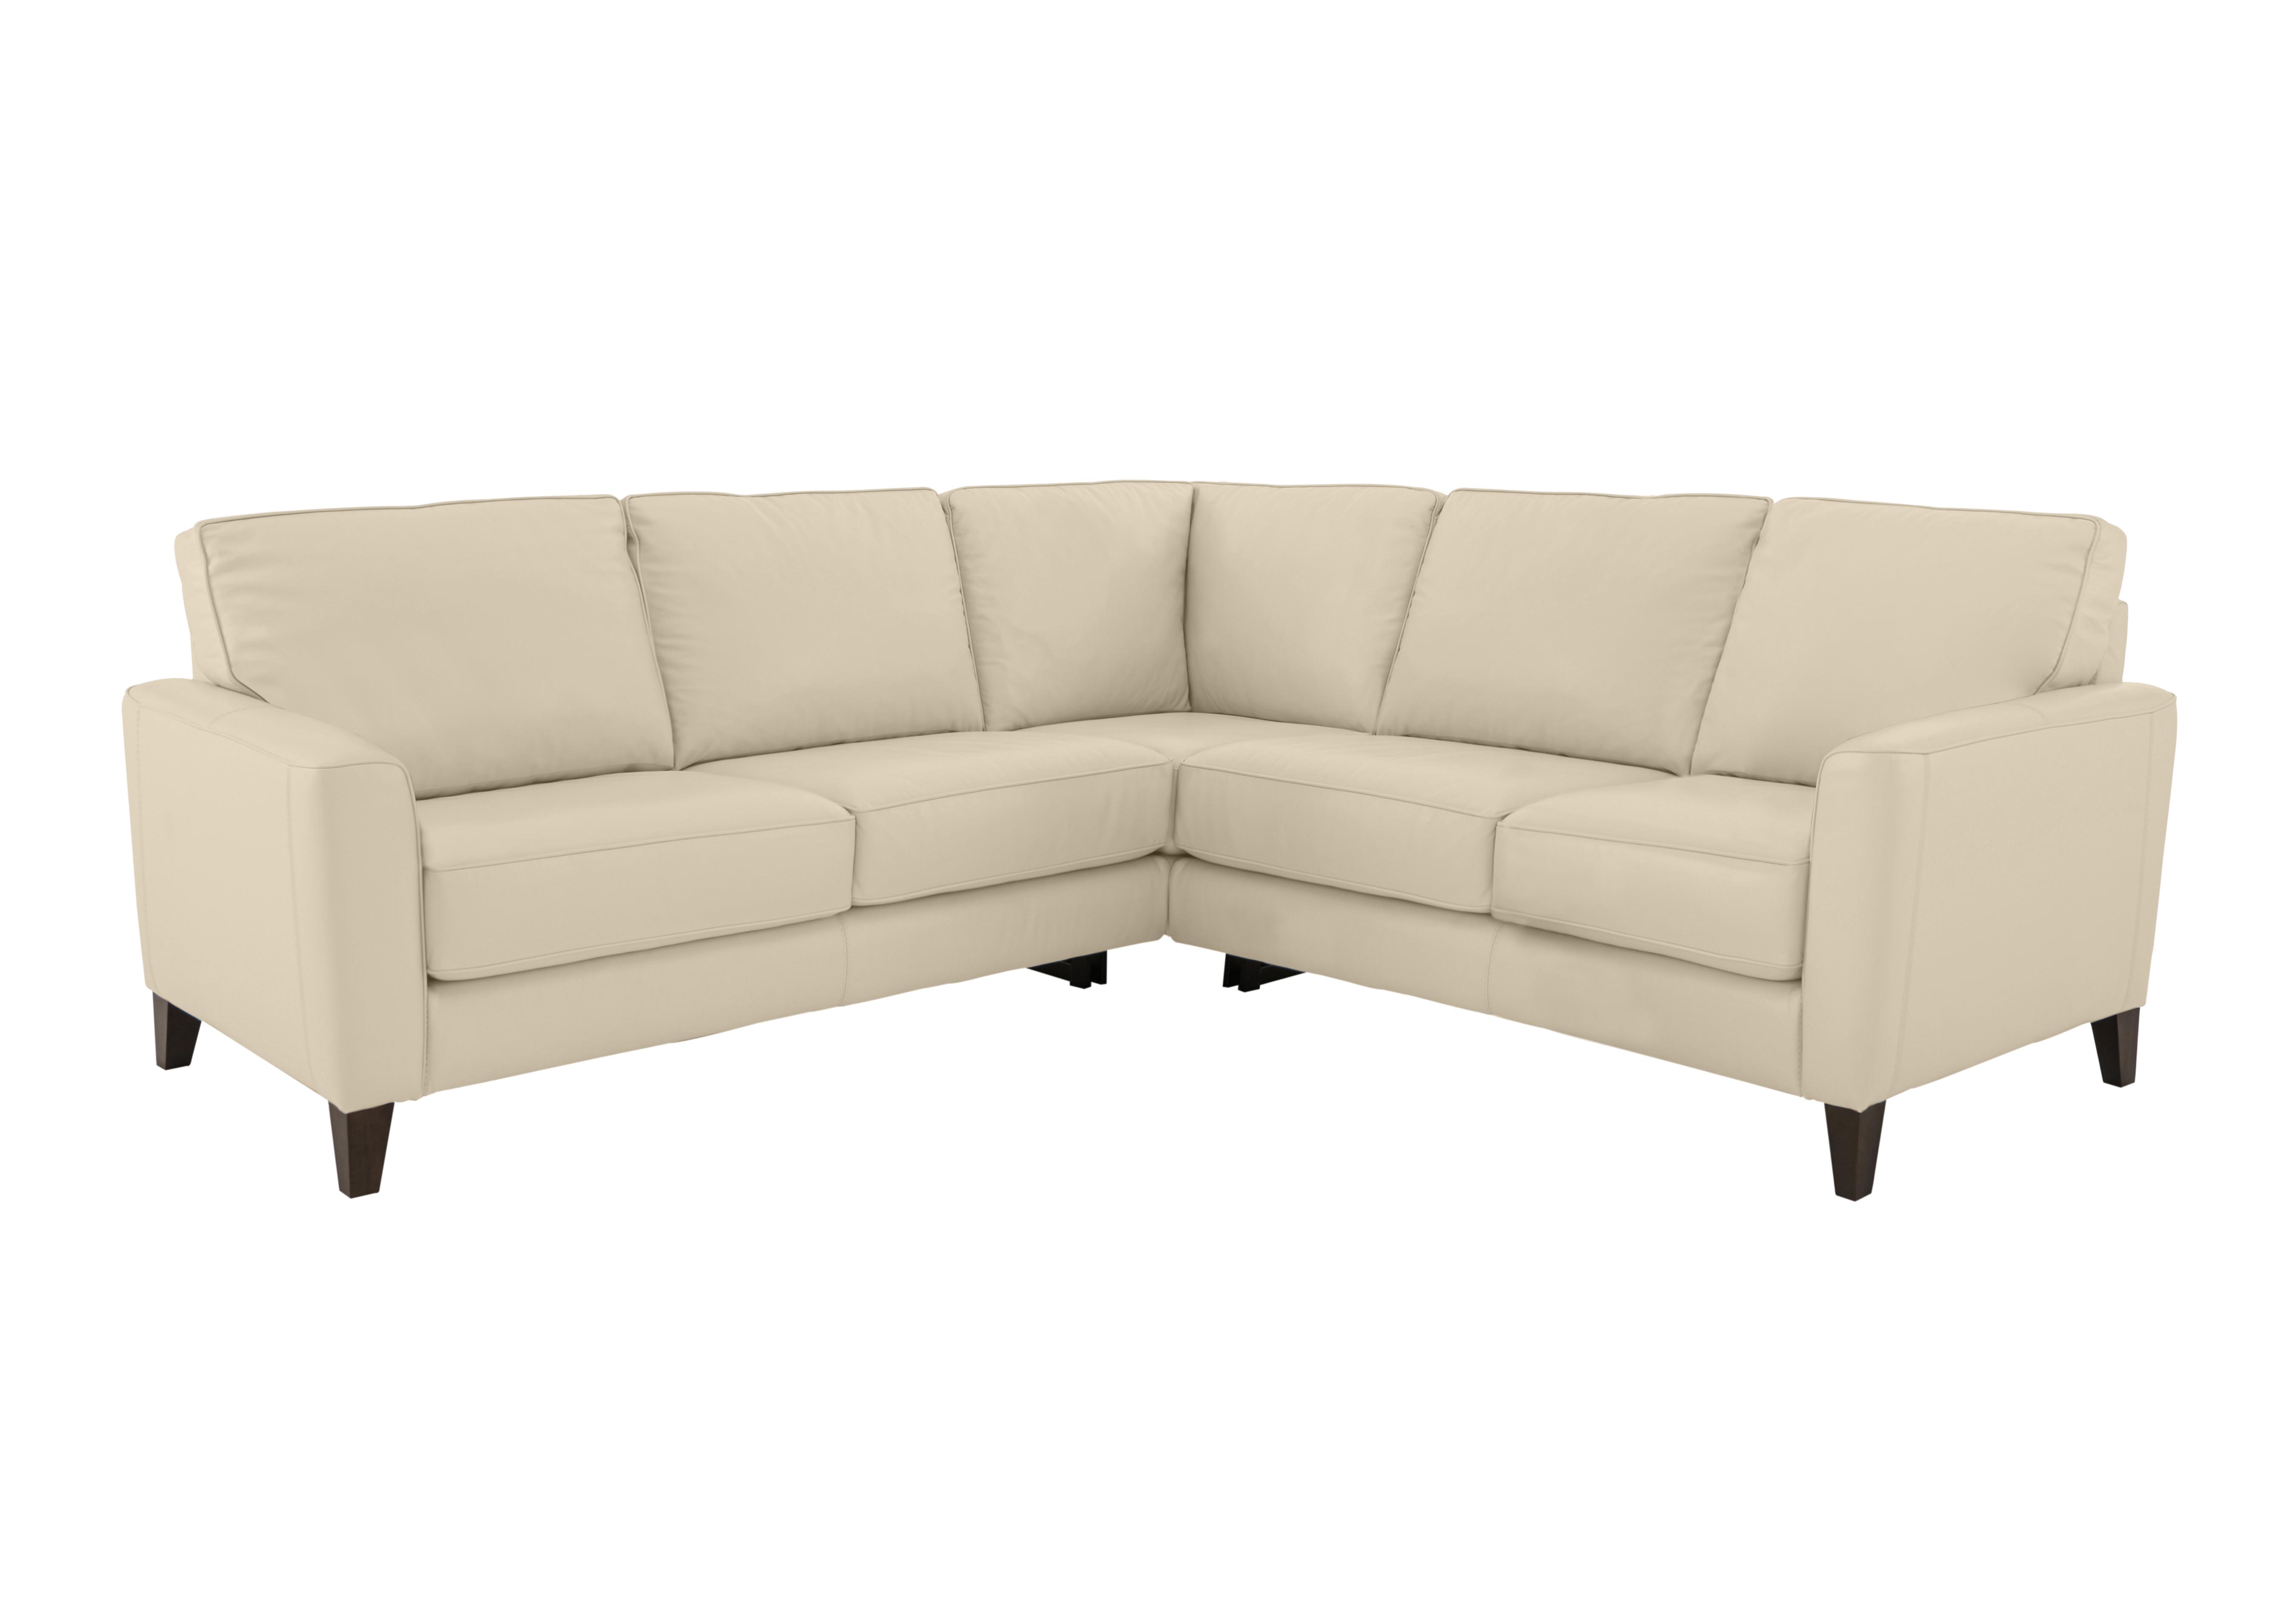 Brondby Large Leather Corner Sofa in Bv-862c Bisque on Furniture Village